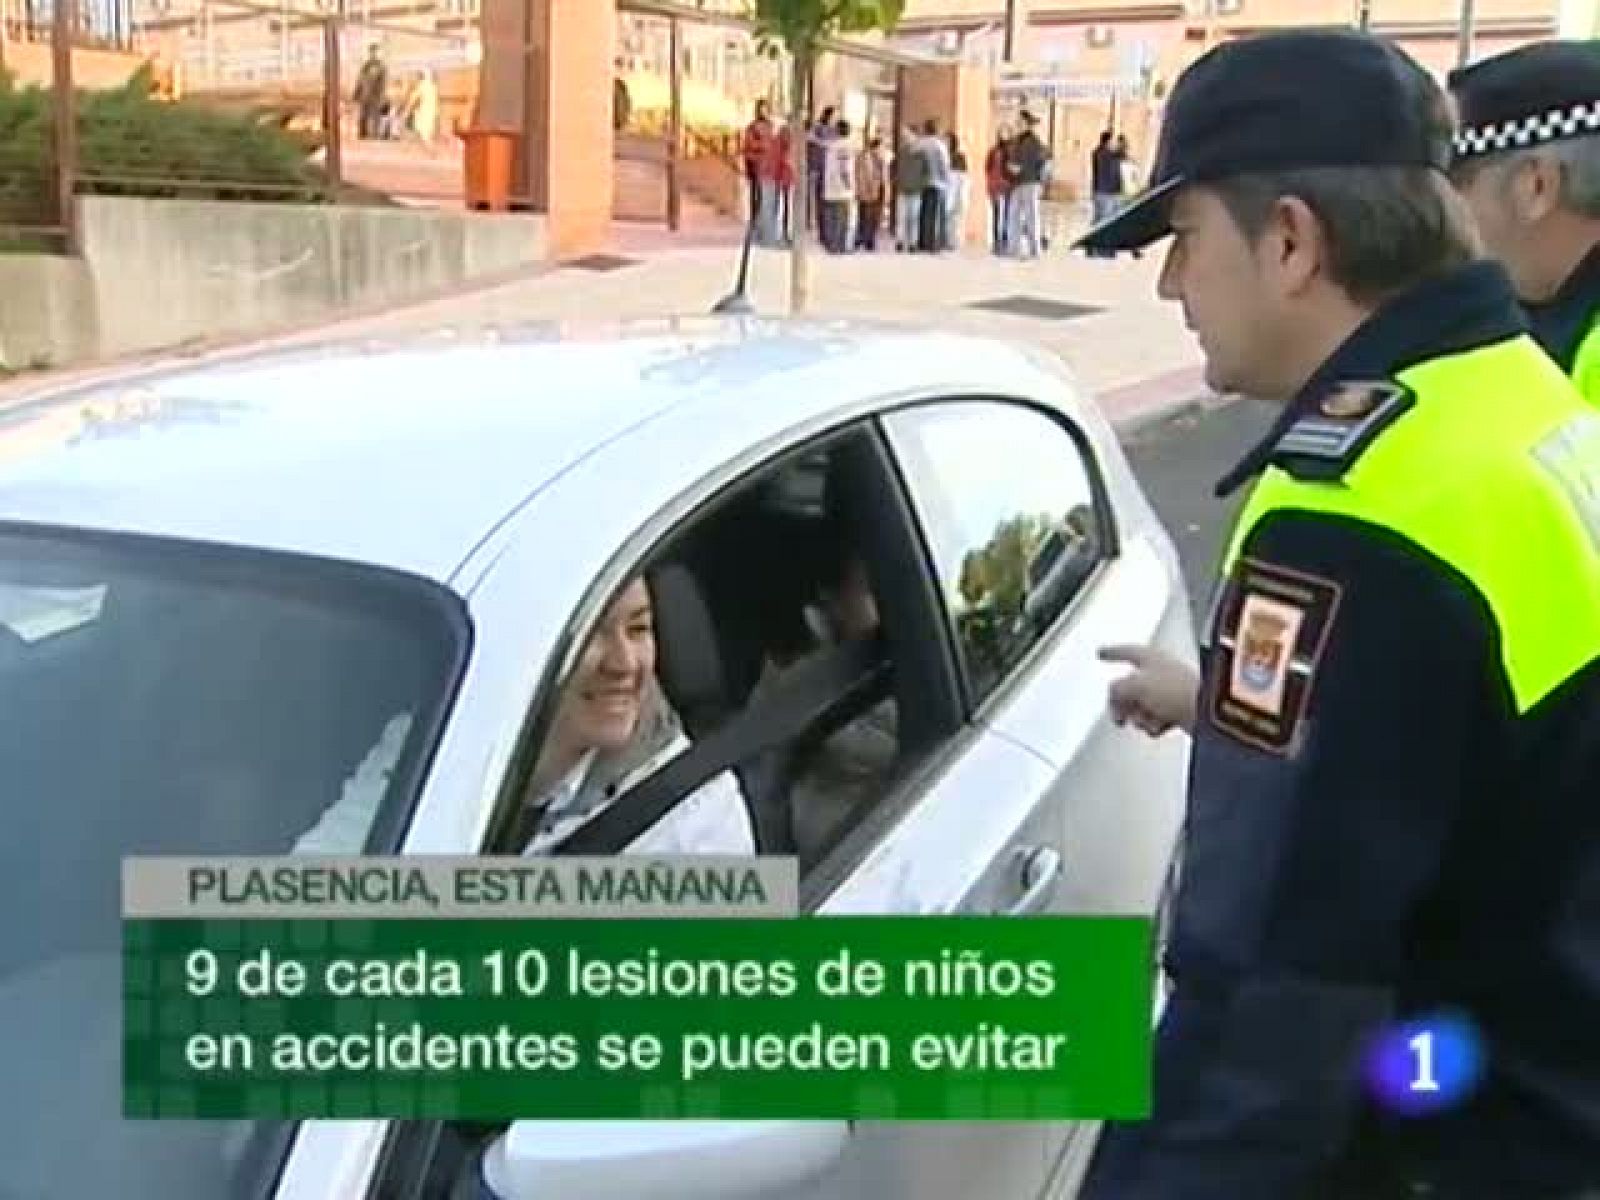 Noticias de Extremadura: Noticias de Extremadura. (16/11/10) | RTVE Play